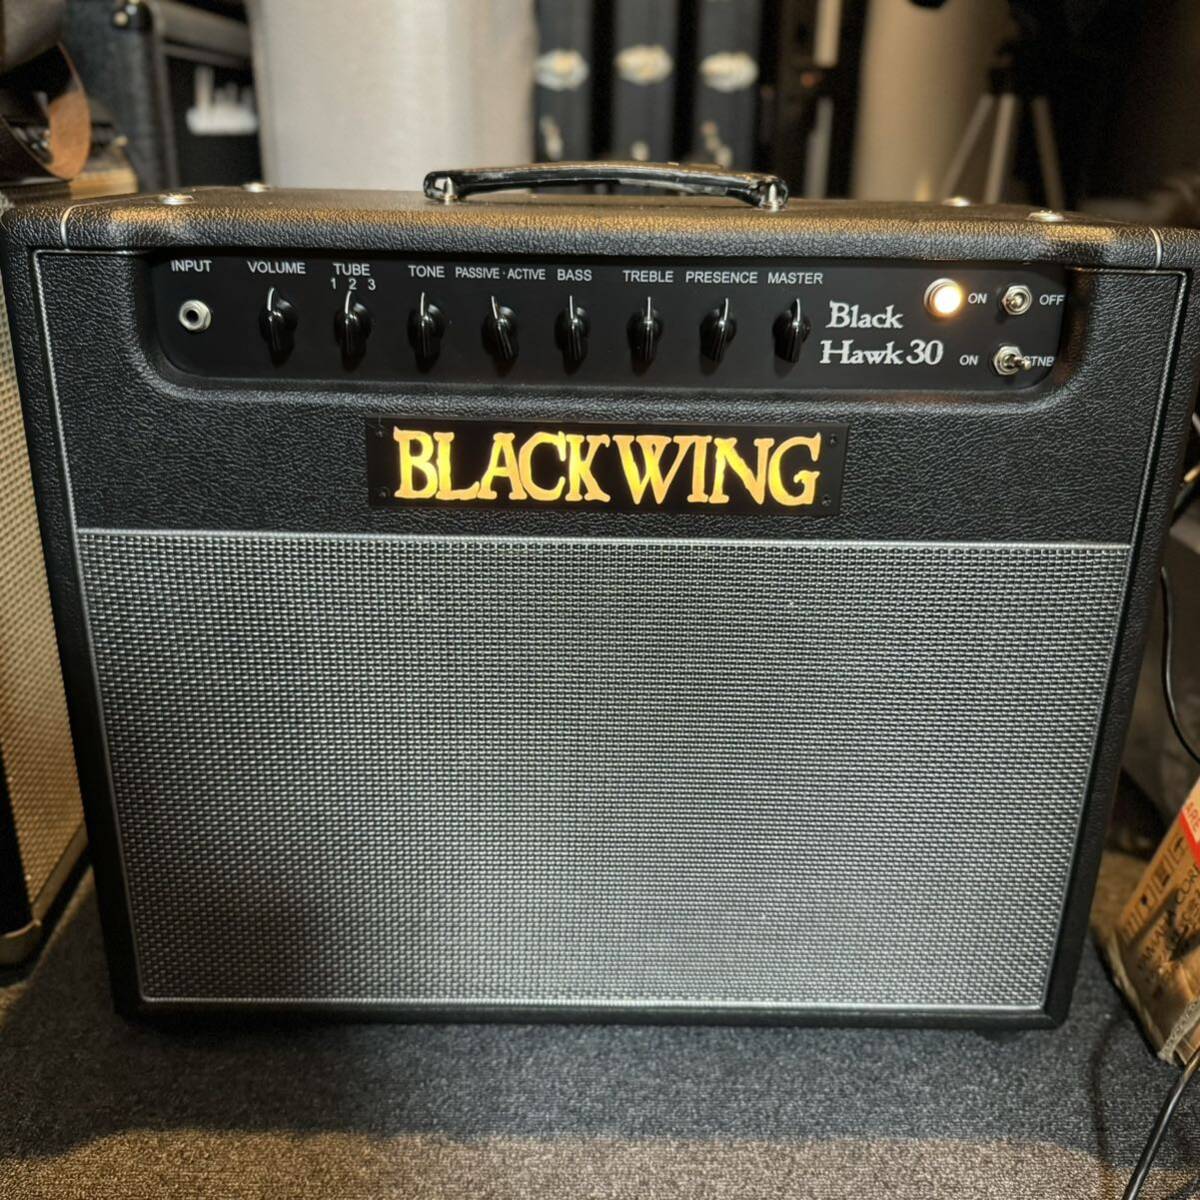 BLACK WING Black Hawk30 ギターアンプ Bad cat